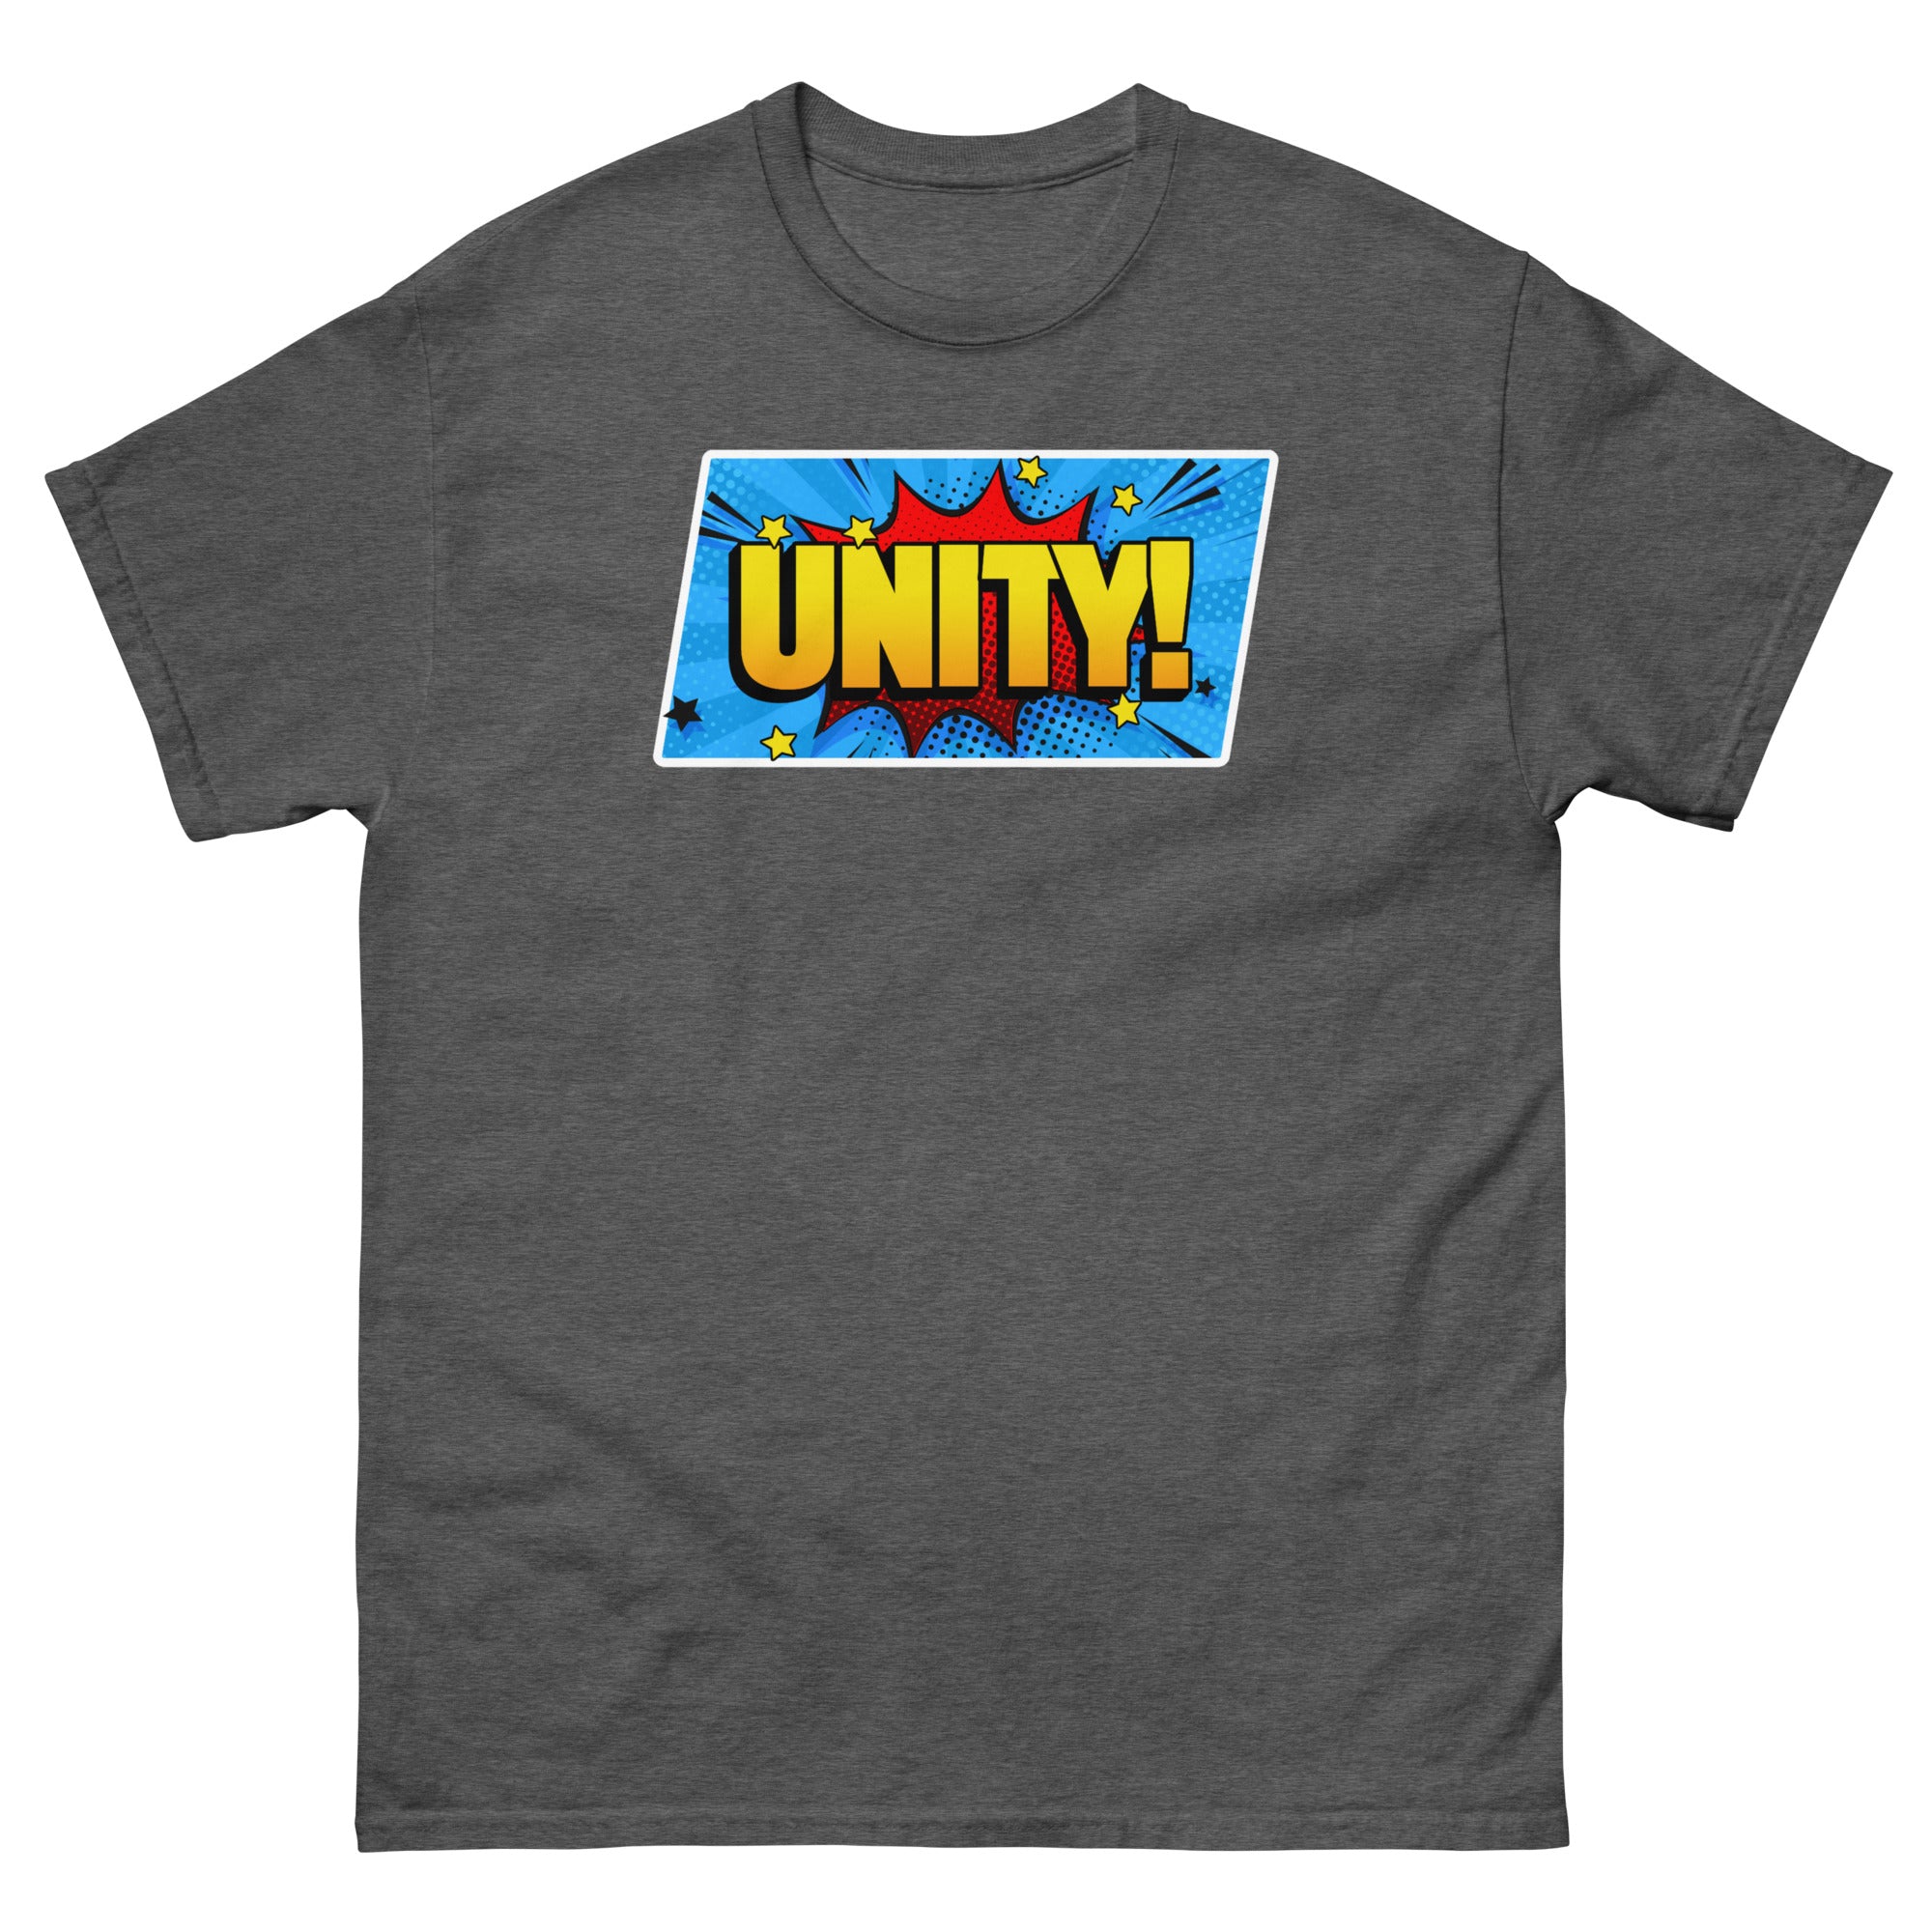 UNITY! Men's T-Shirt